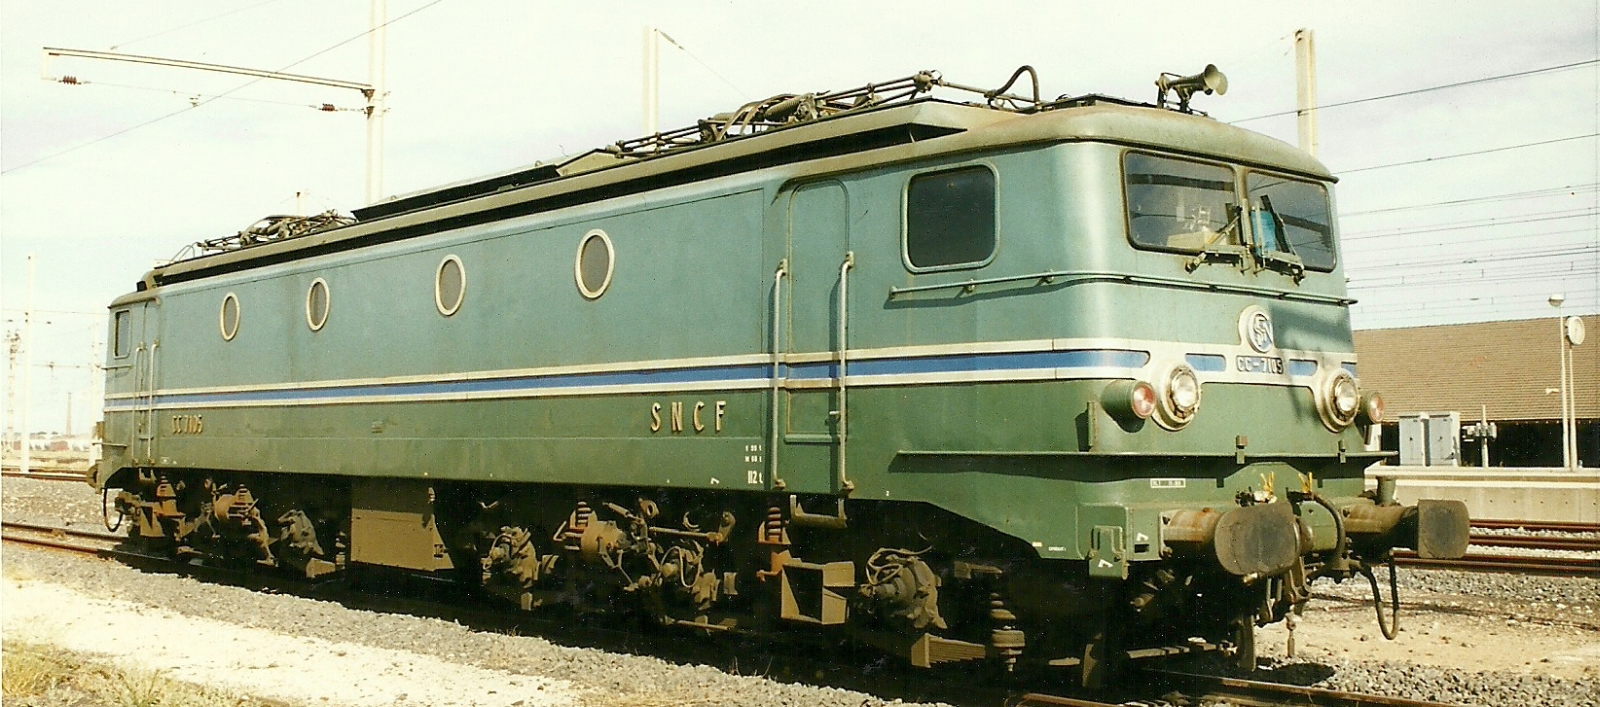 CC 7105 in 1998 in Séte